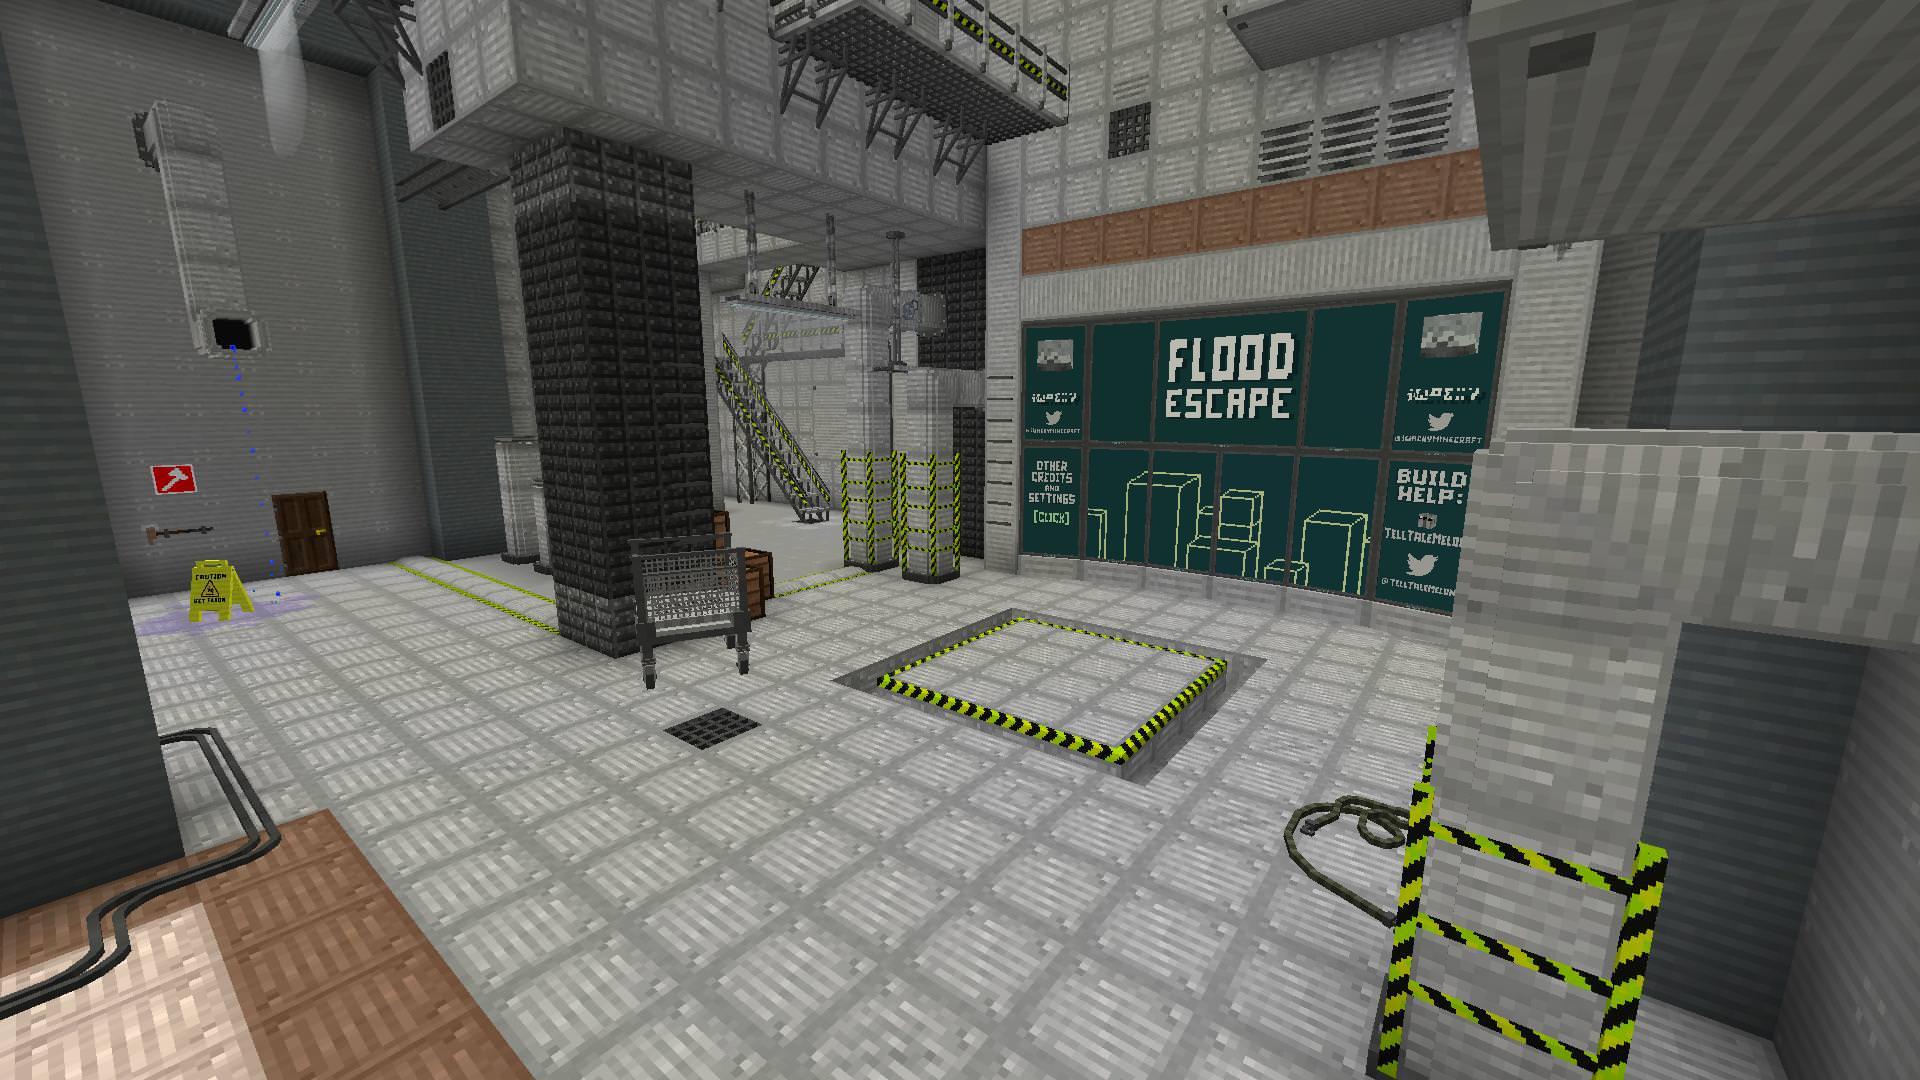 Flood Escape - we can escape roblox flood escape w gamer chad